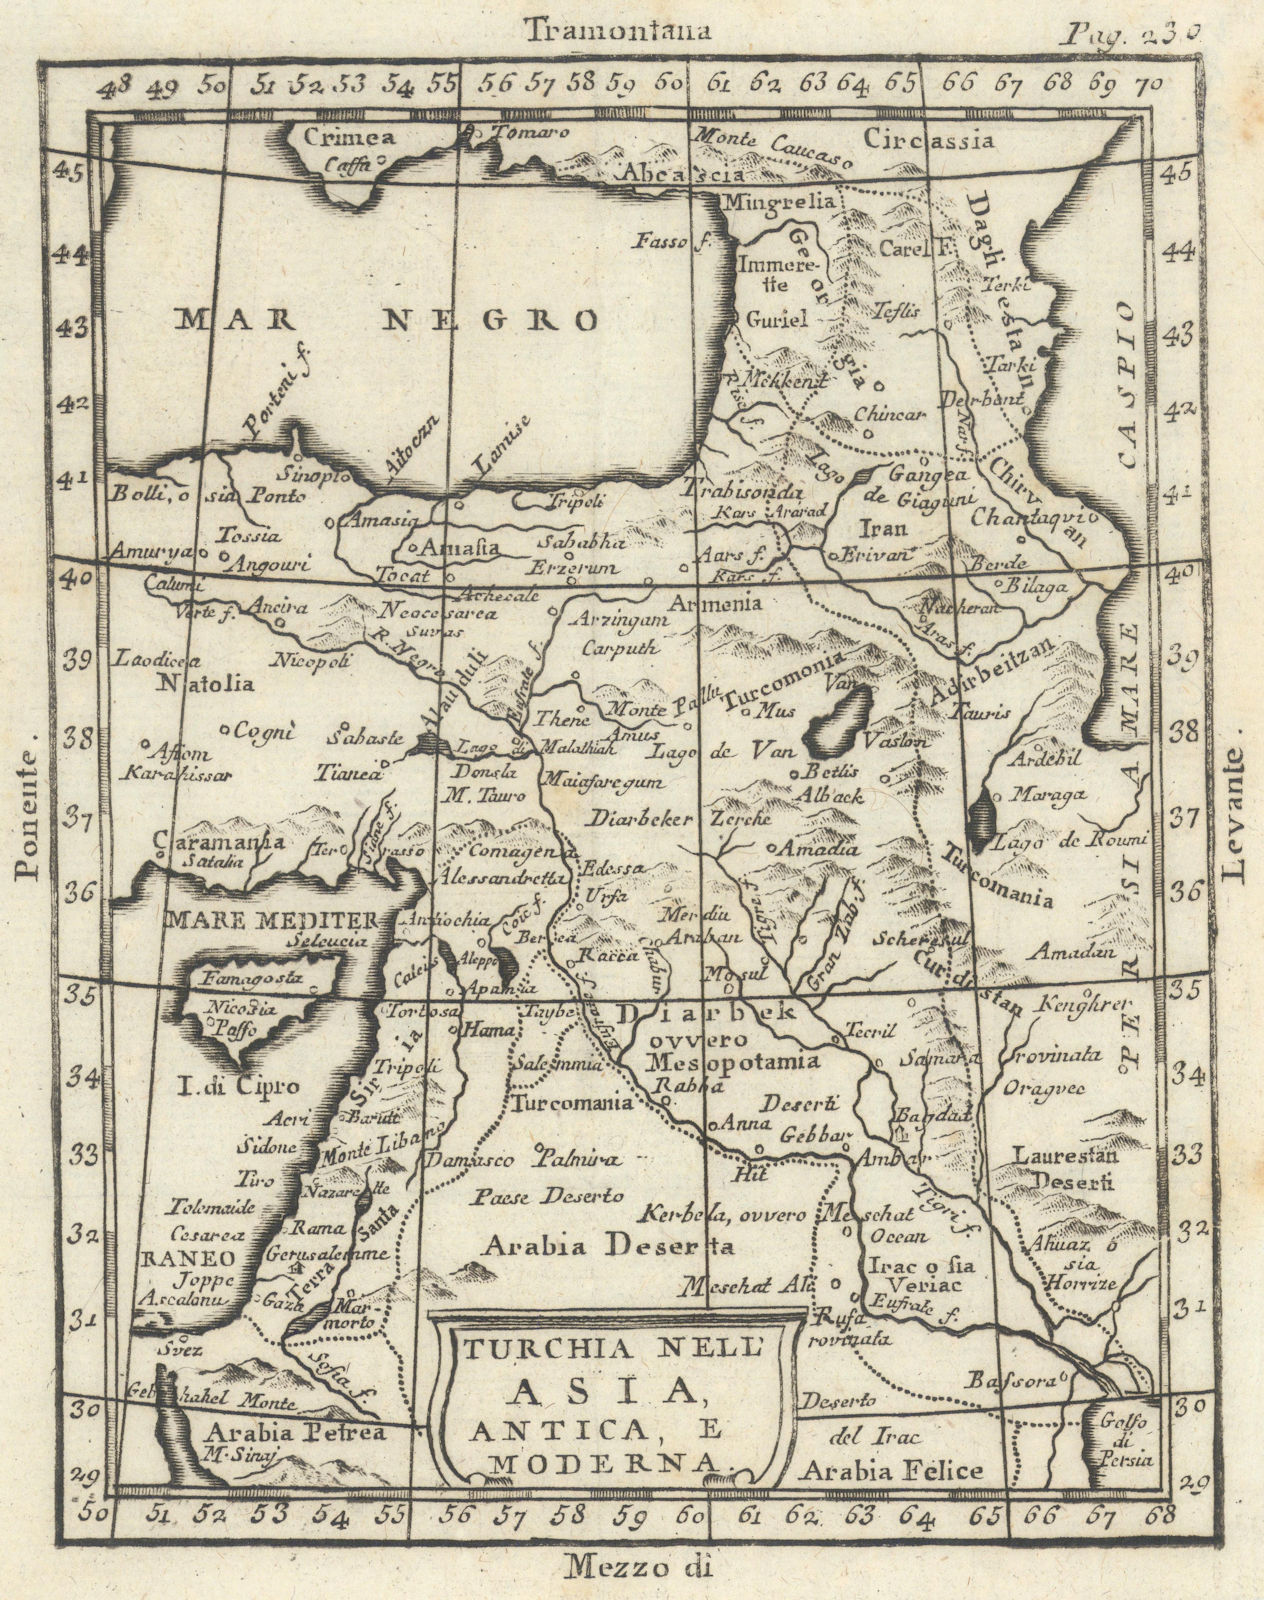 'Turchia Nell' Aisa Antica, e Moderna'. Turkey in Asia. Iraq. BUFFIER 1788 map